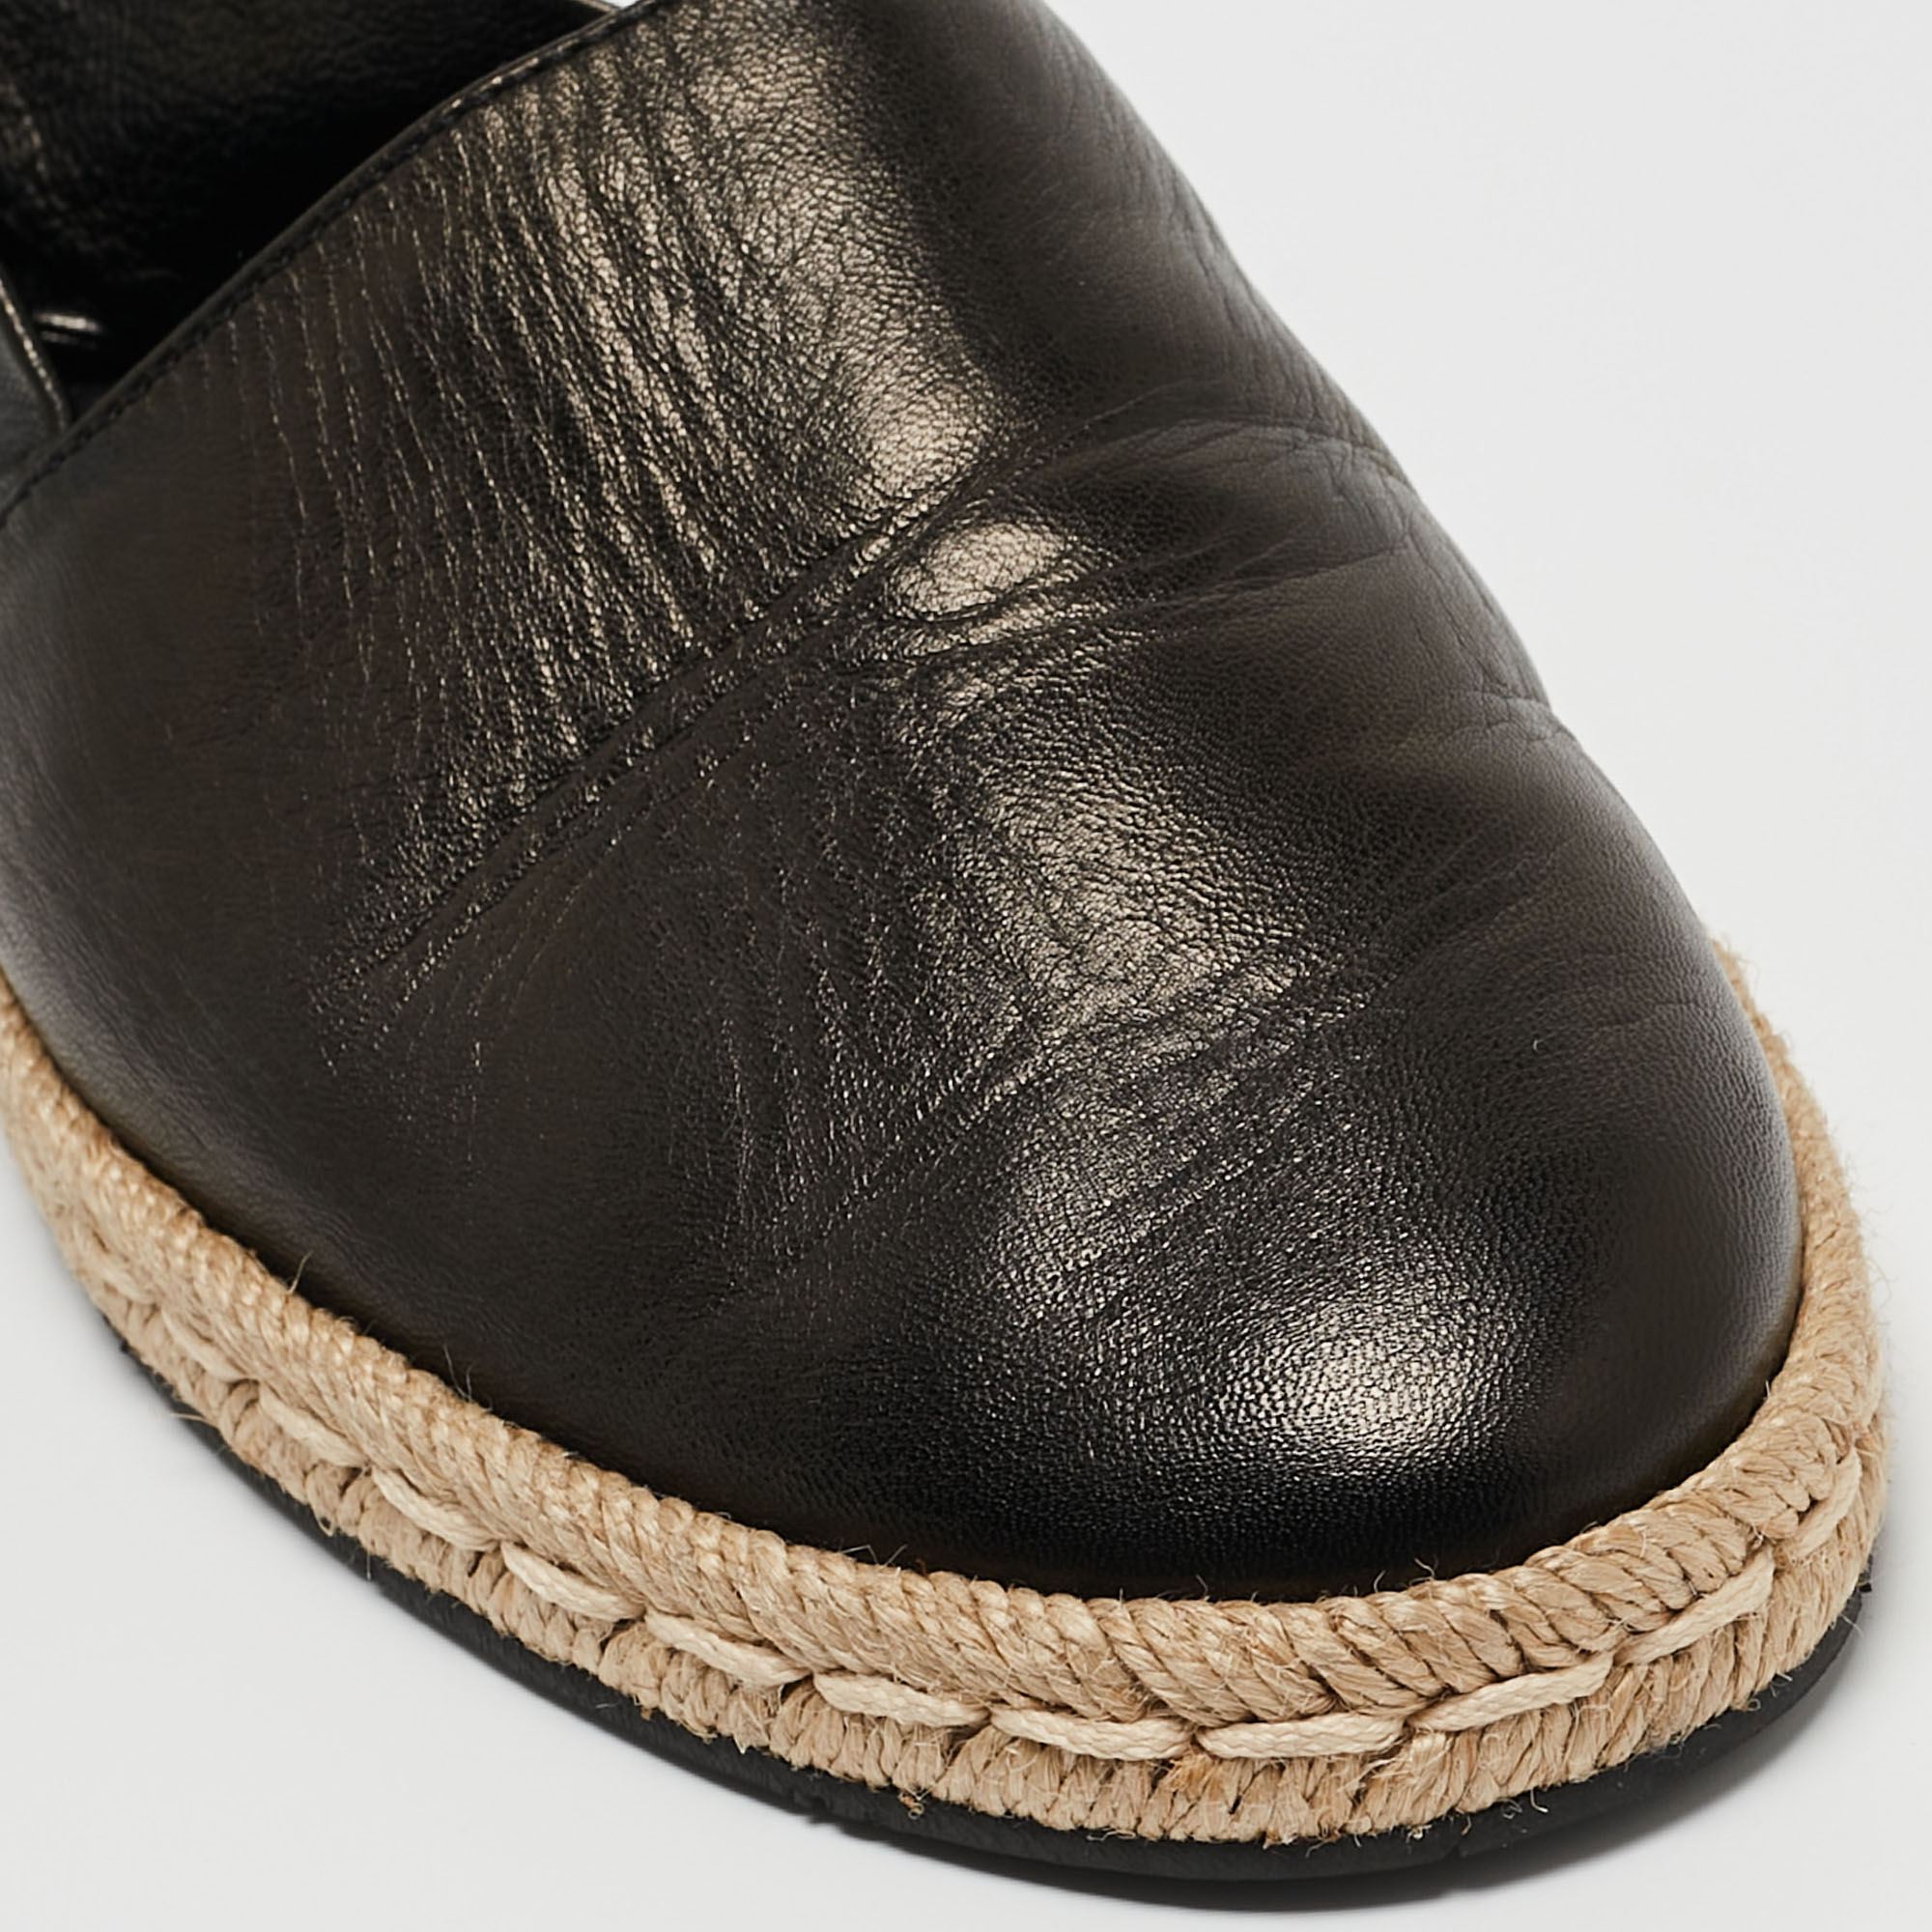 Moncler Black Leather Ankle Tie Espadrille Flats Size 37